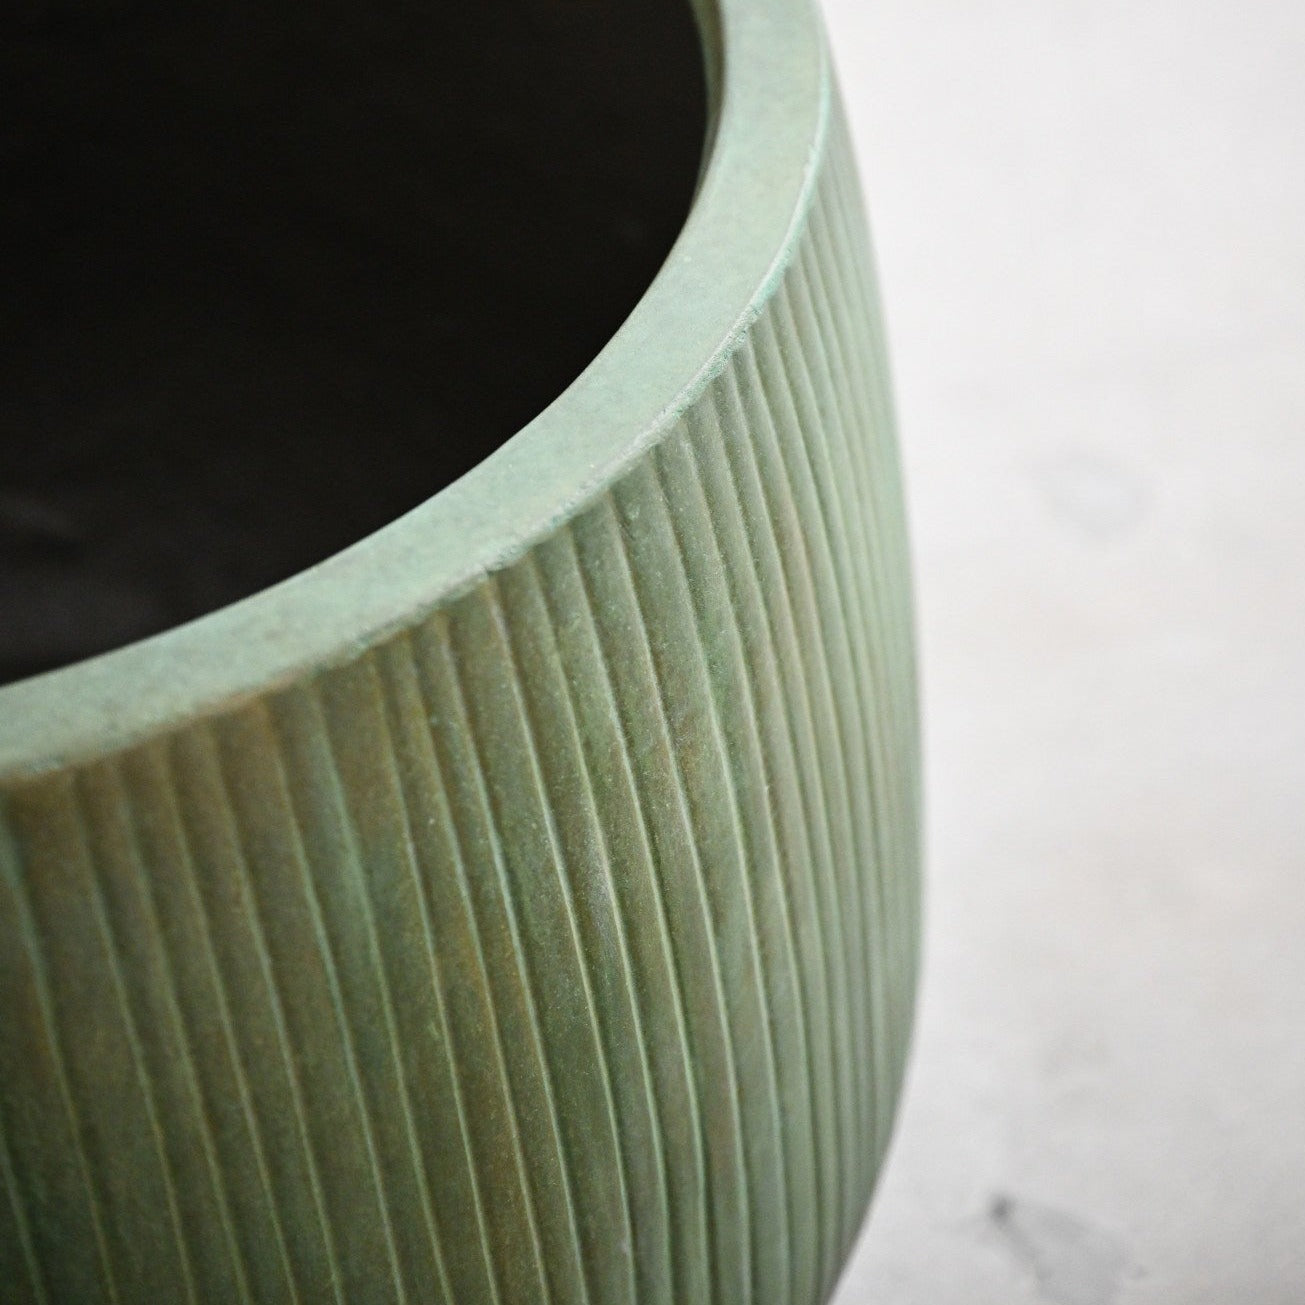 Nerja Concrete Pot - Copper Green